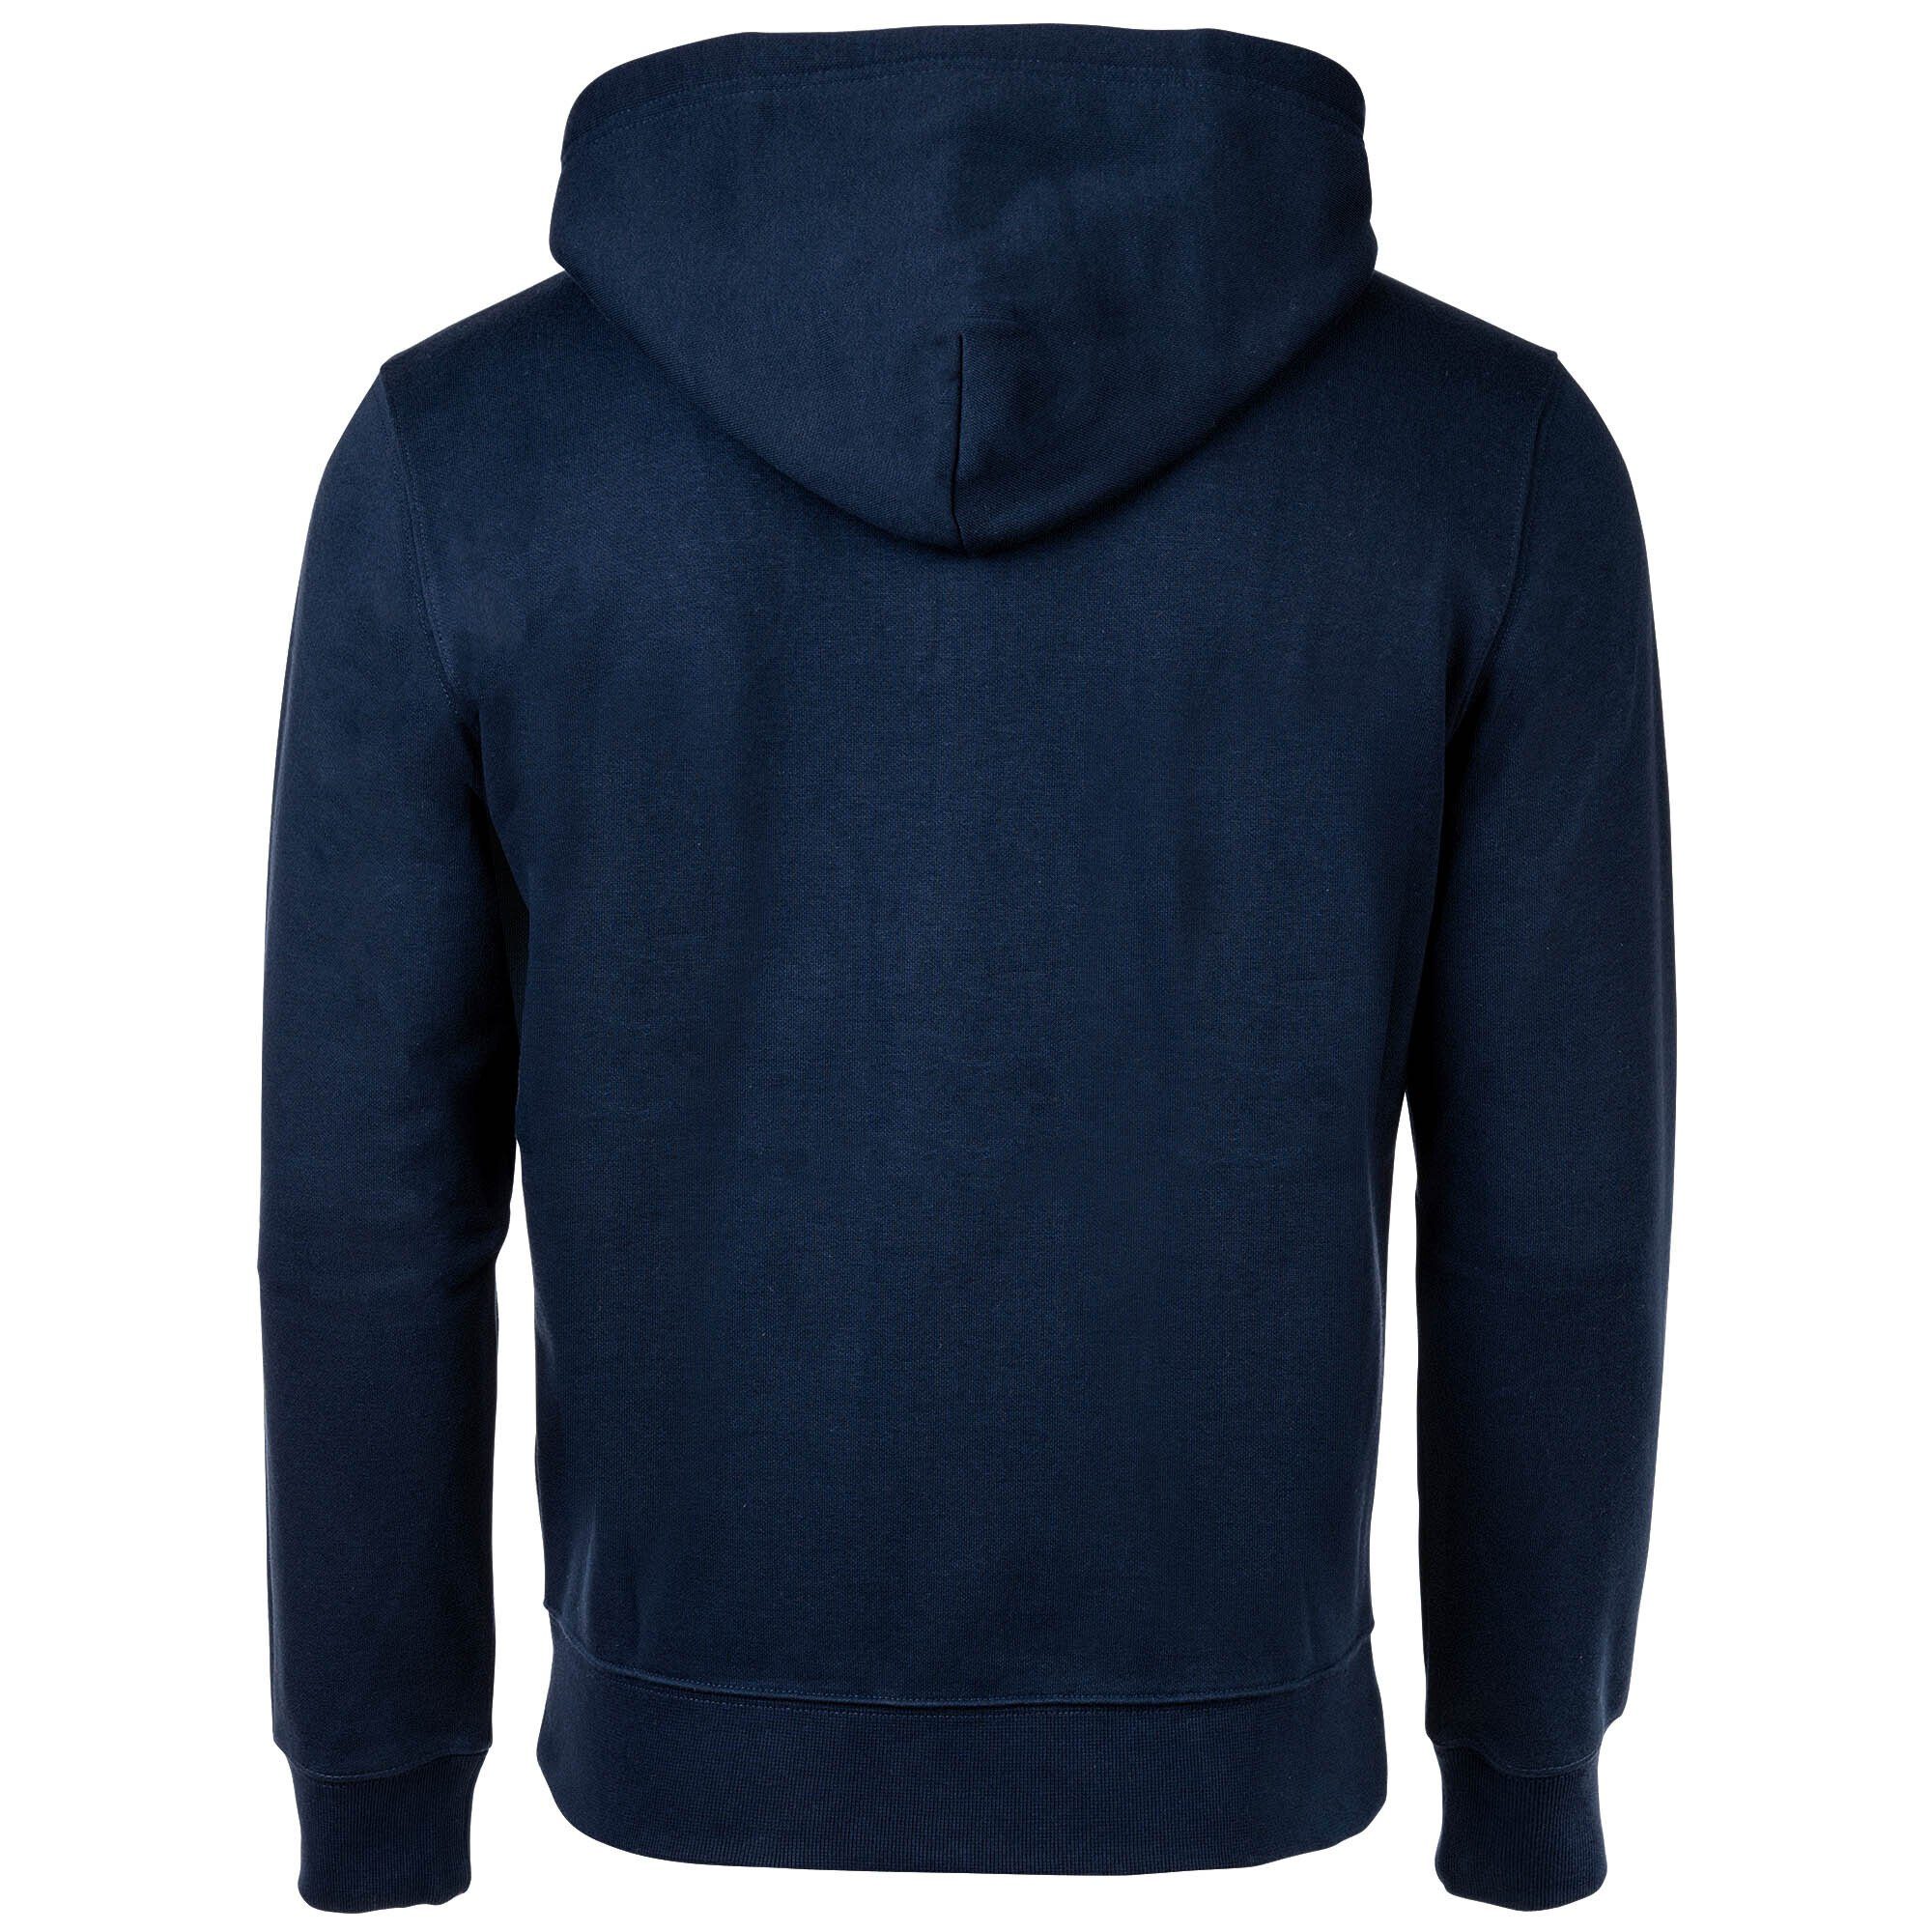 Sweatshirt Zip Herren - Hooded Sweatjacke Champion Blau Sweatshirt Full